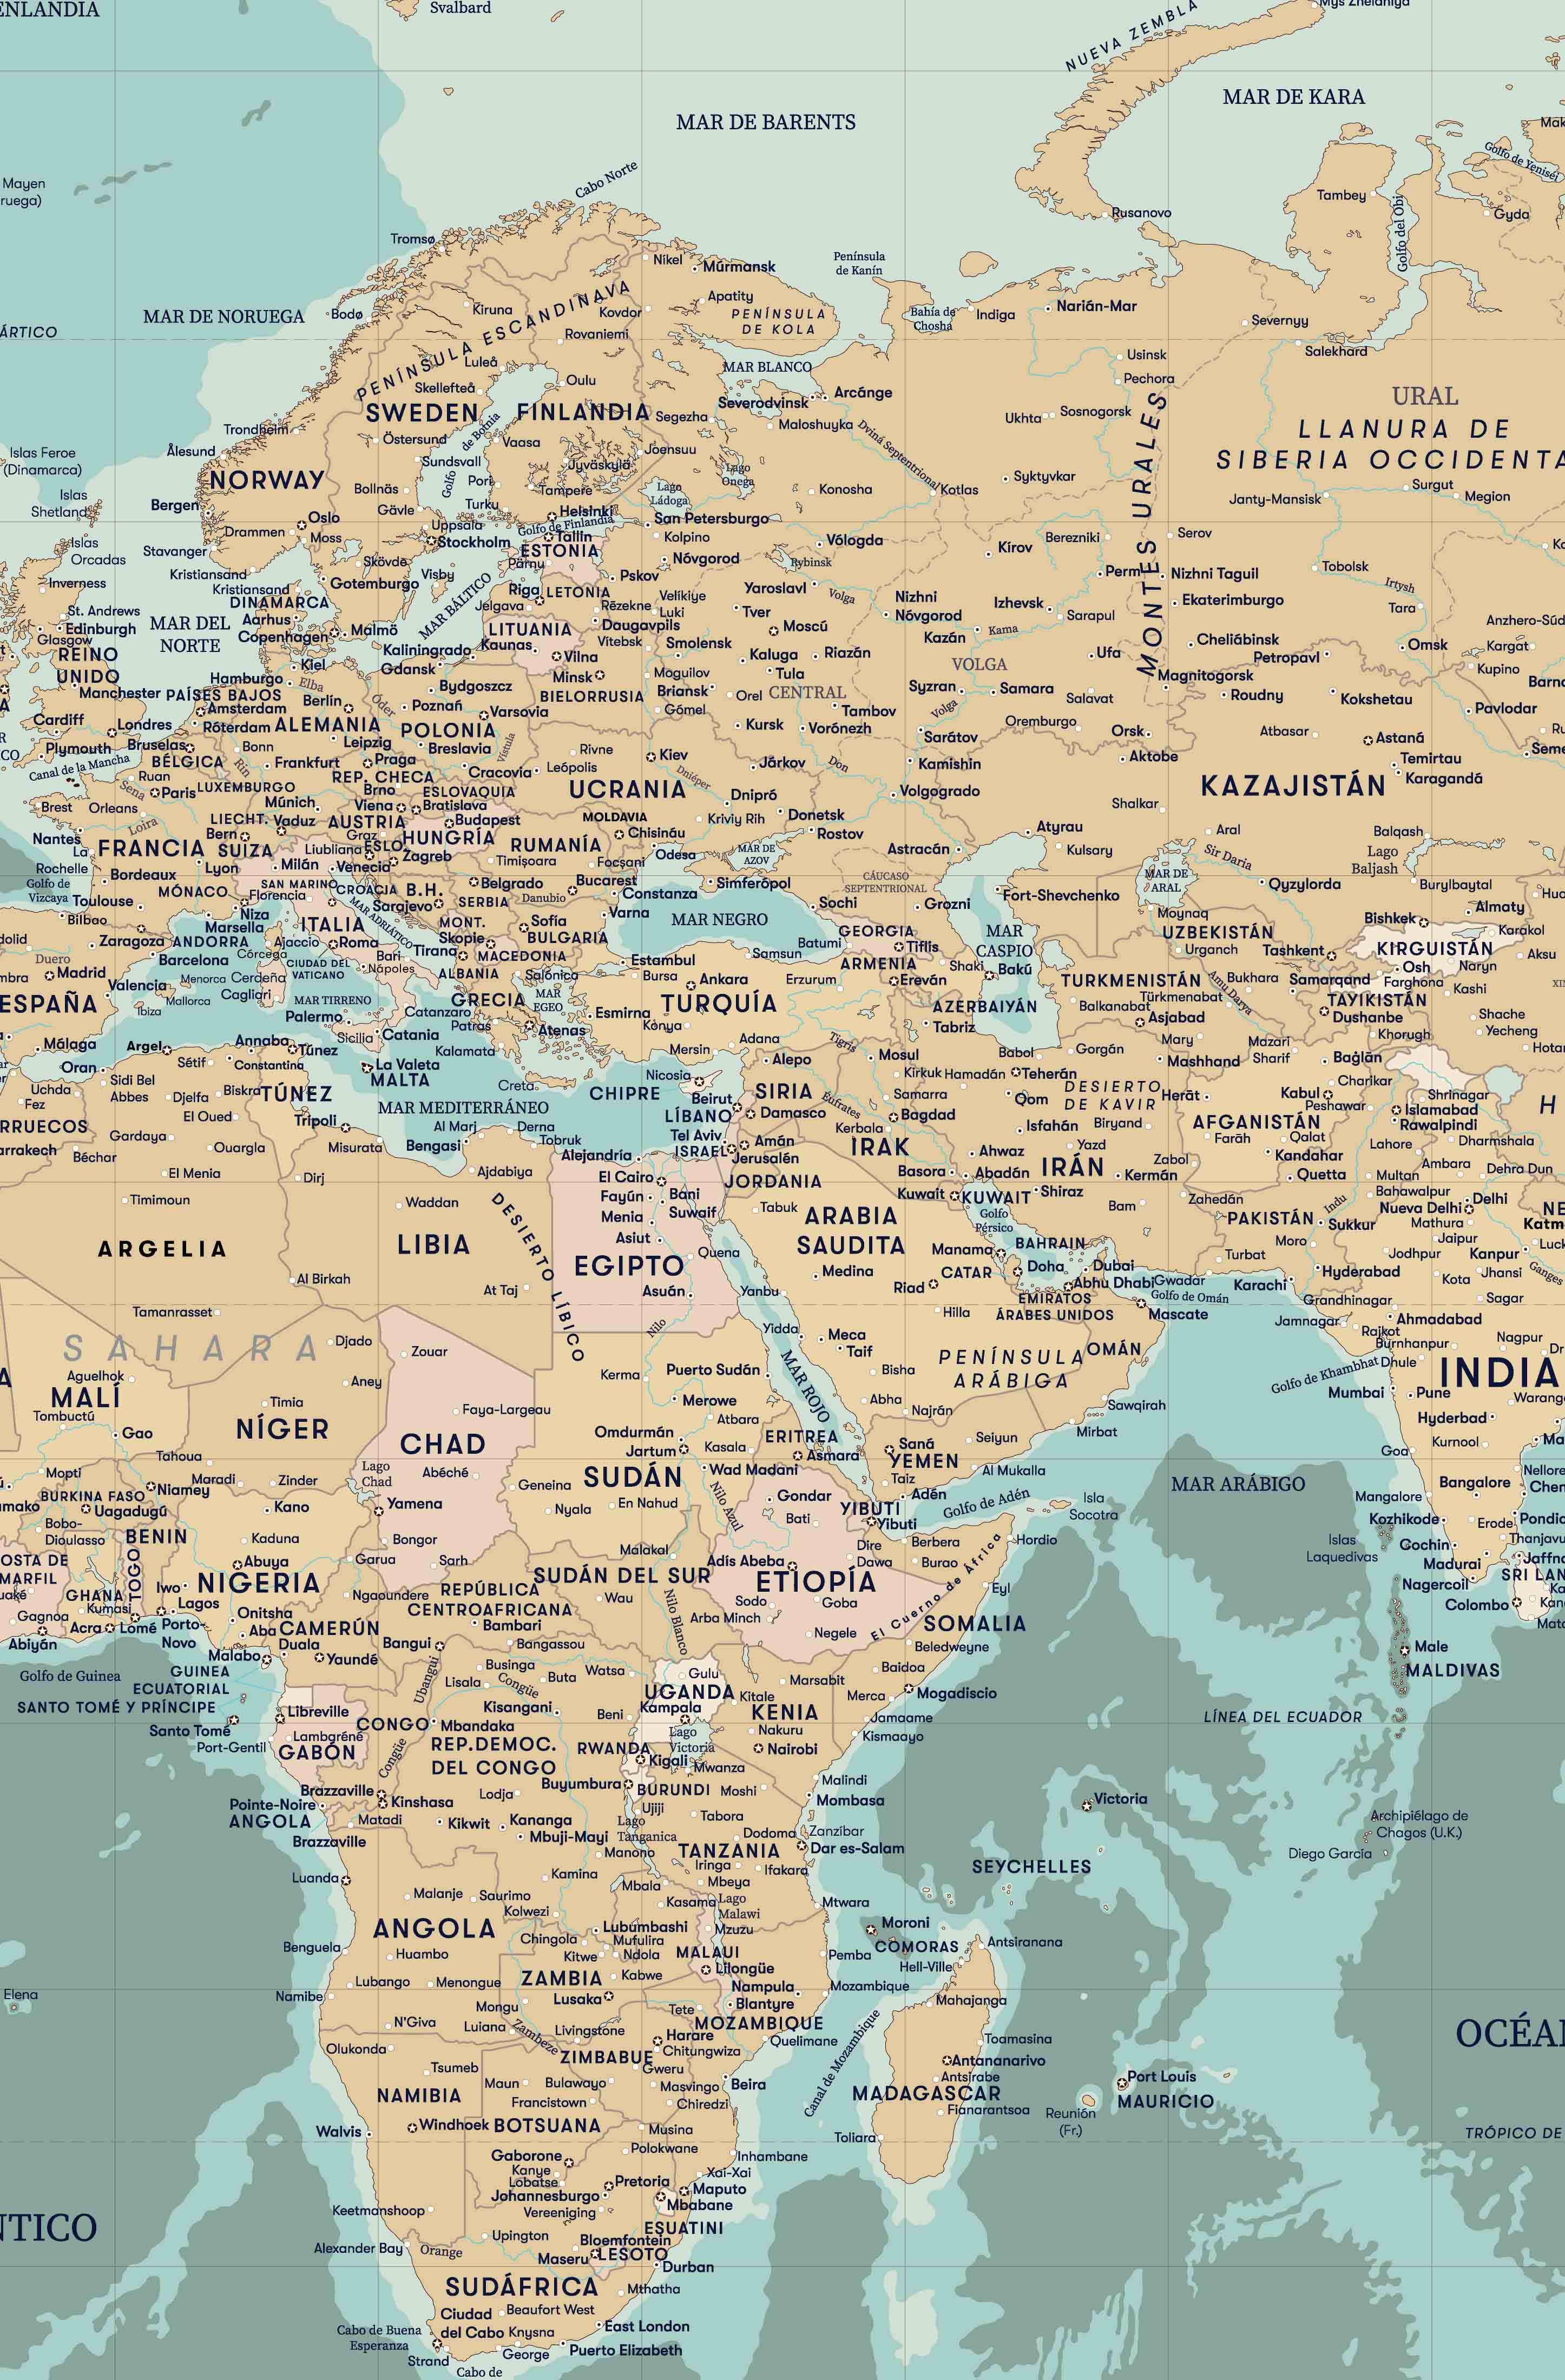 Mapa del Mundo Actualizado a Color - Deco Mural A PEDIDO